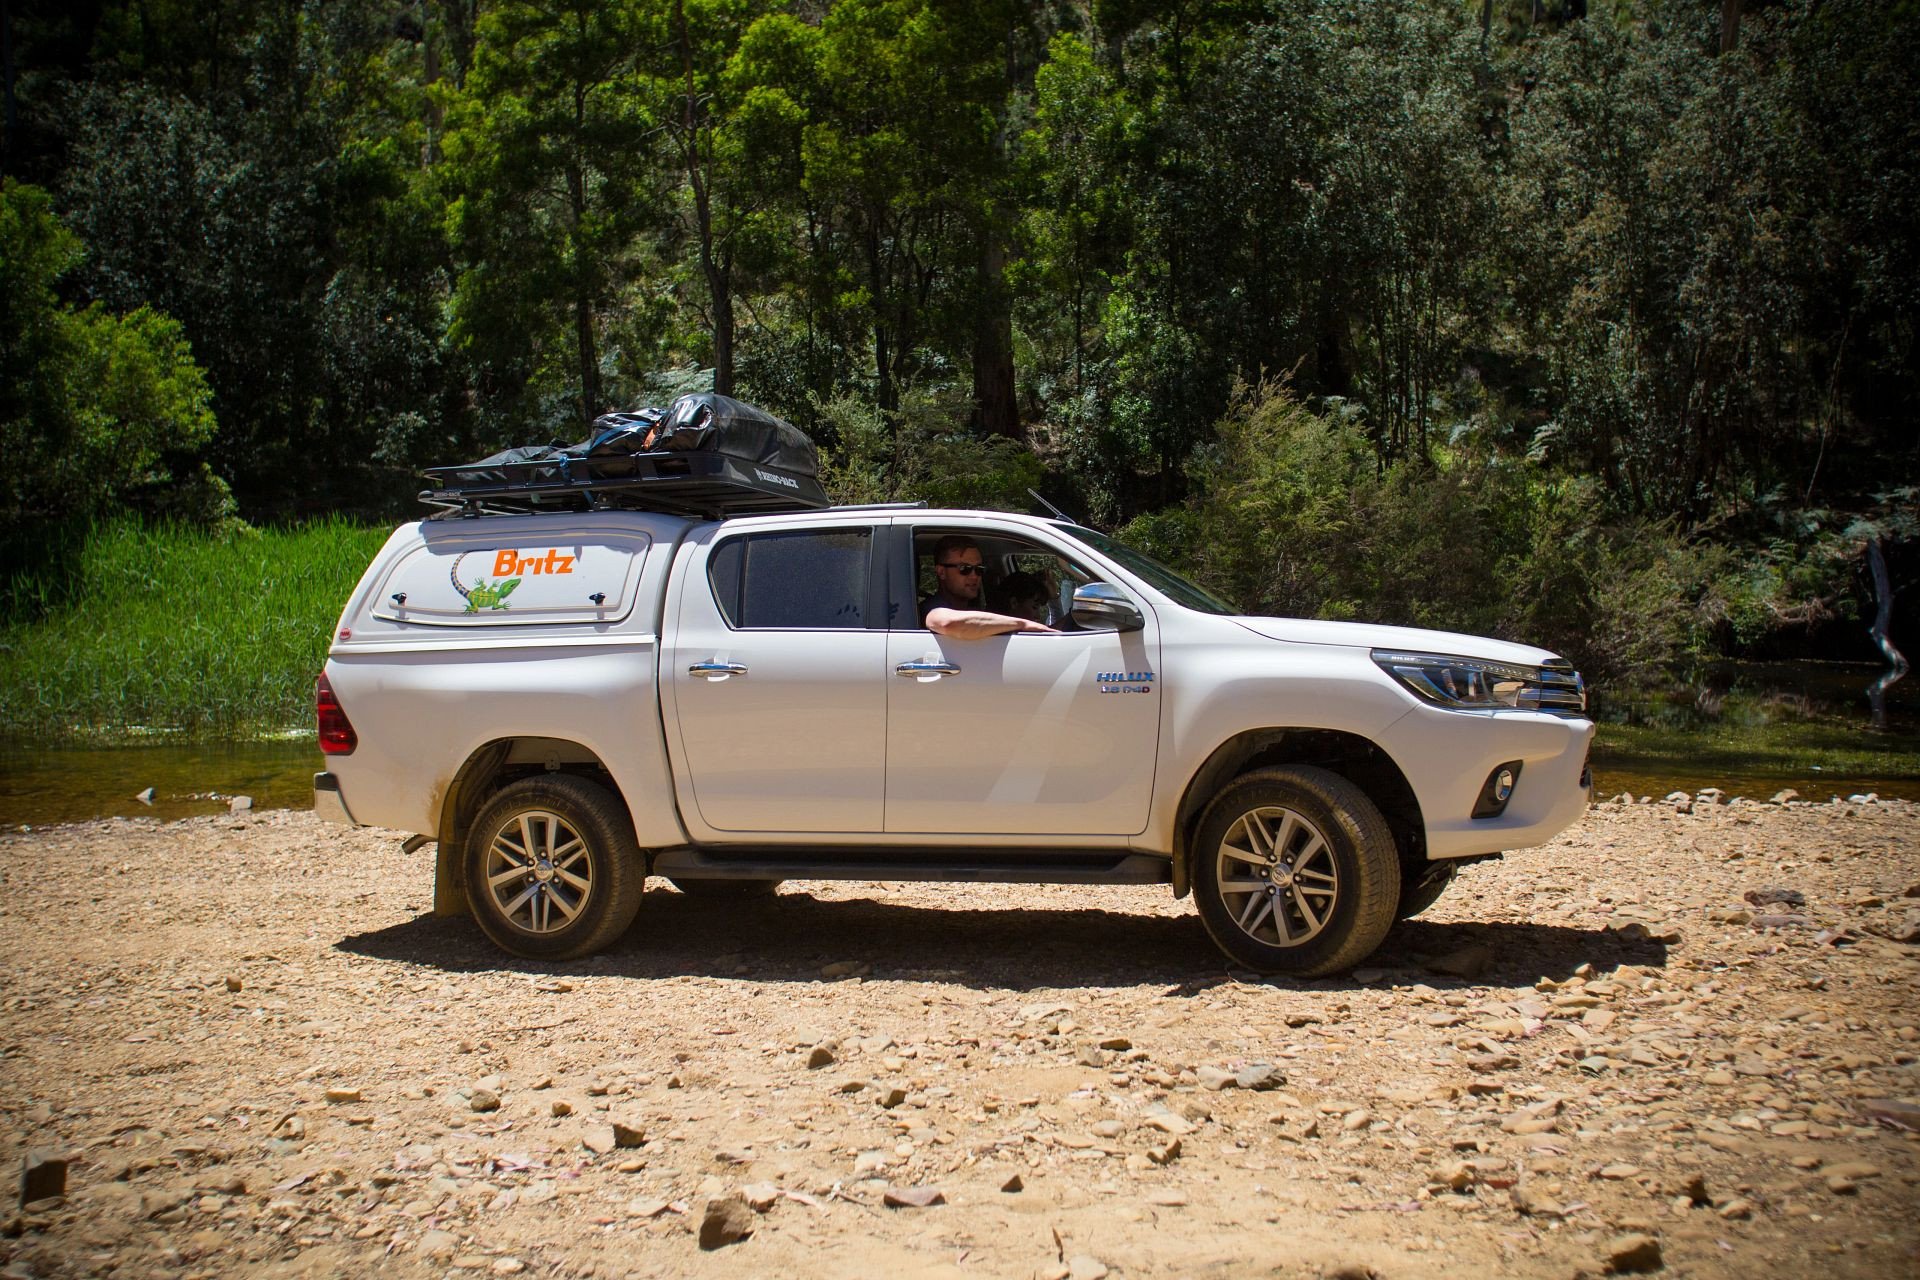 Britz AU Outback 4WD in de natuur